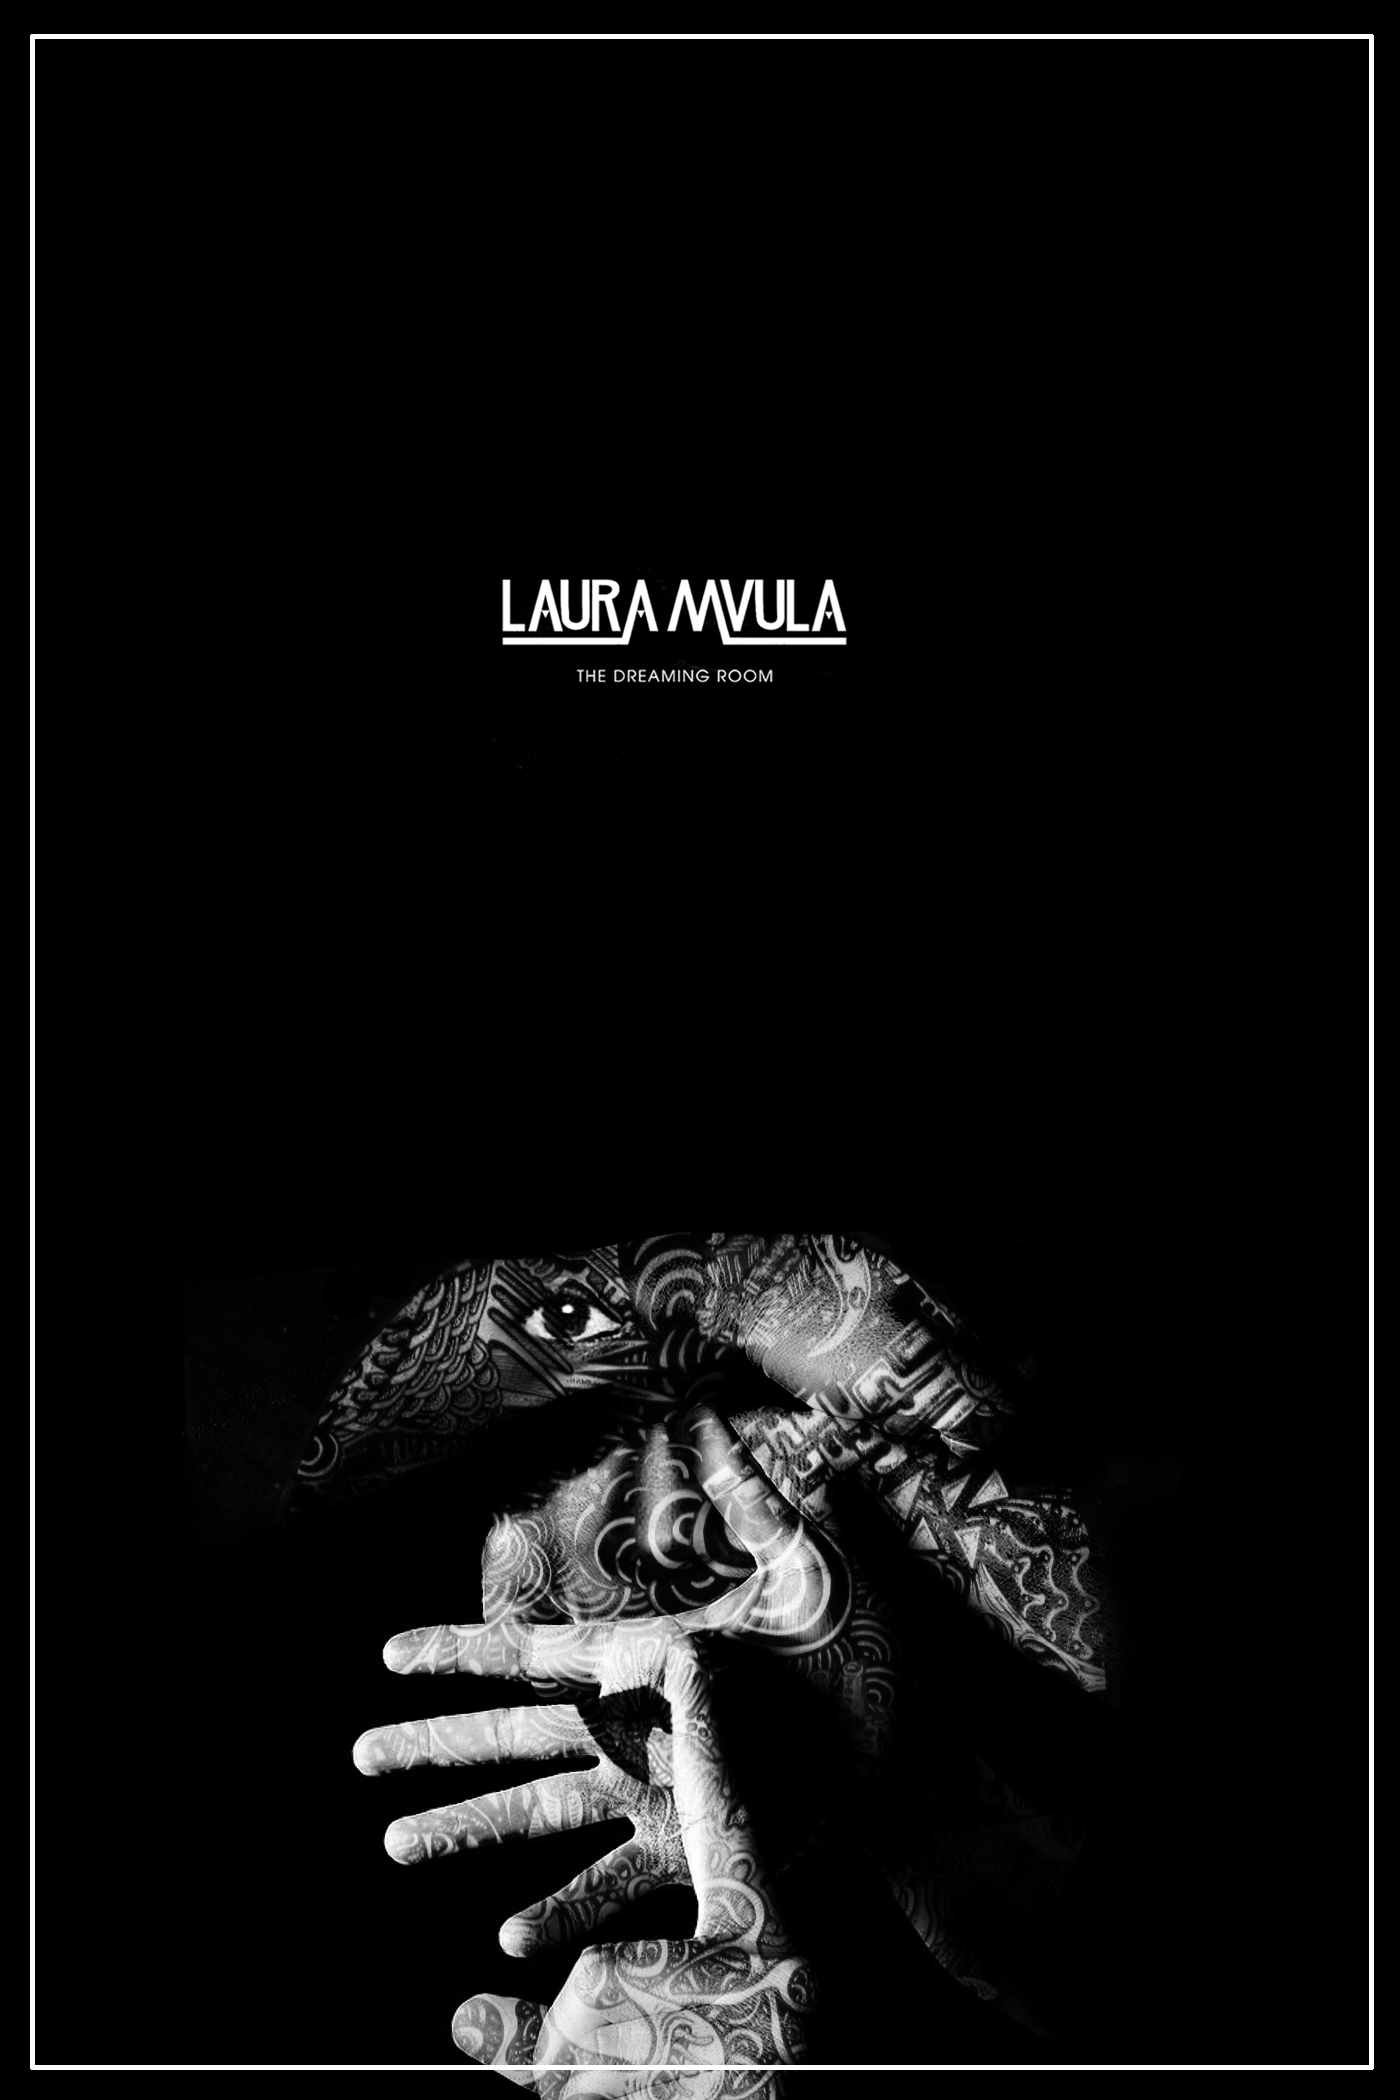 Laura Mvula Album body painting online campaign visual artwork The Dreaming Room #CreativeCloud art wacom